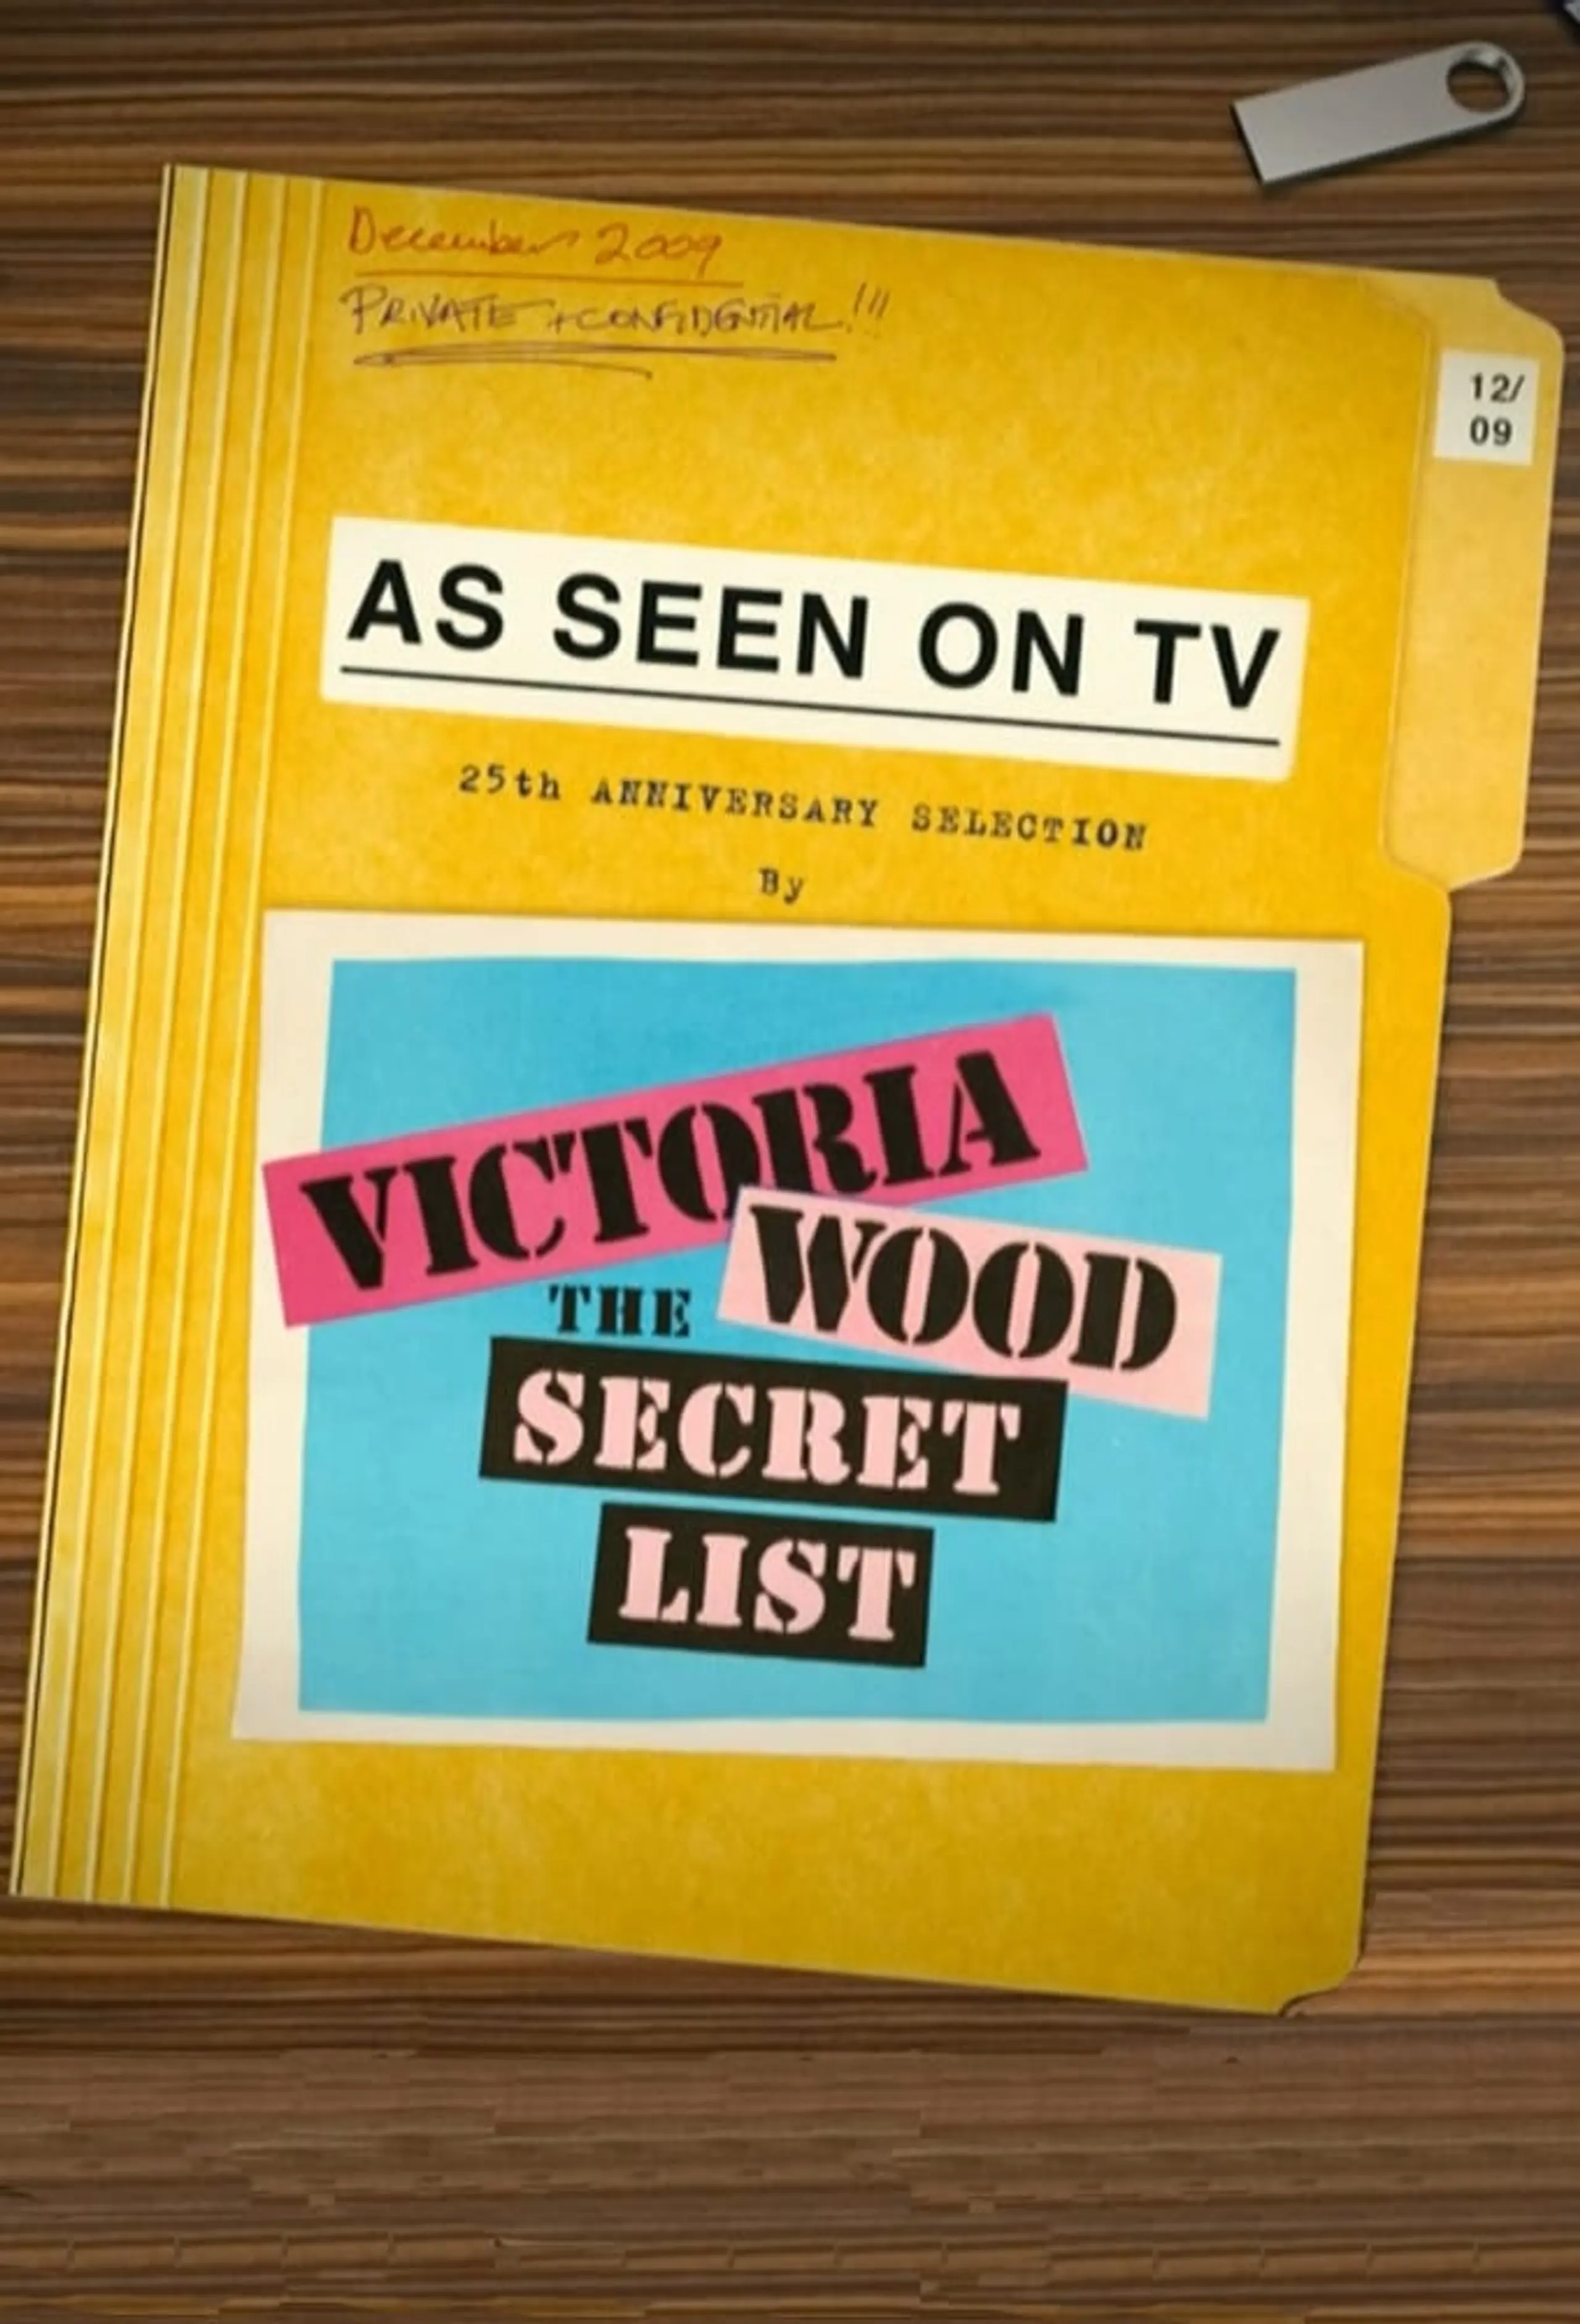 Victoria Wood: The Secret List